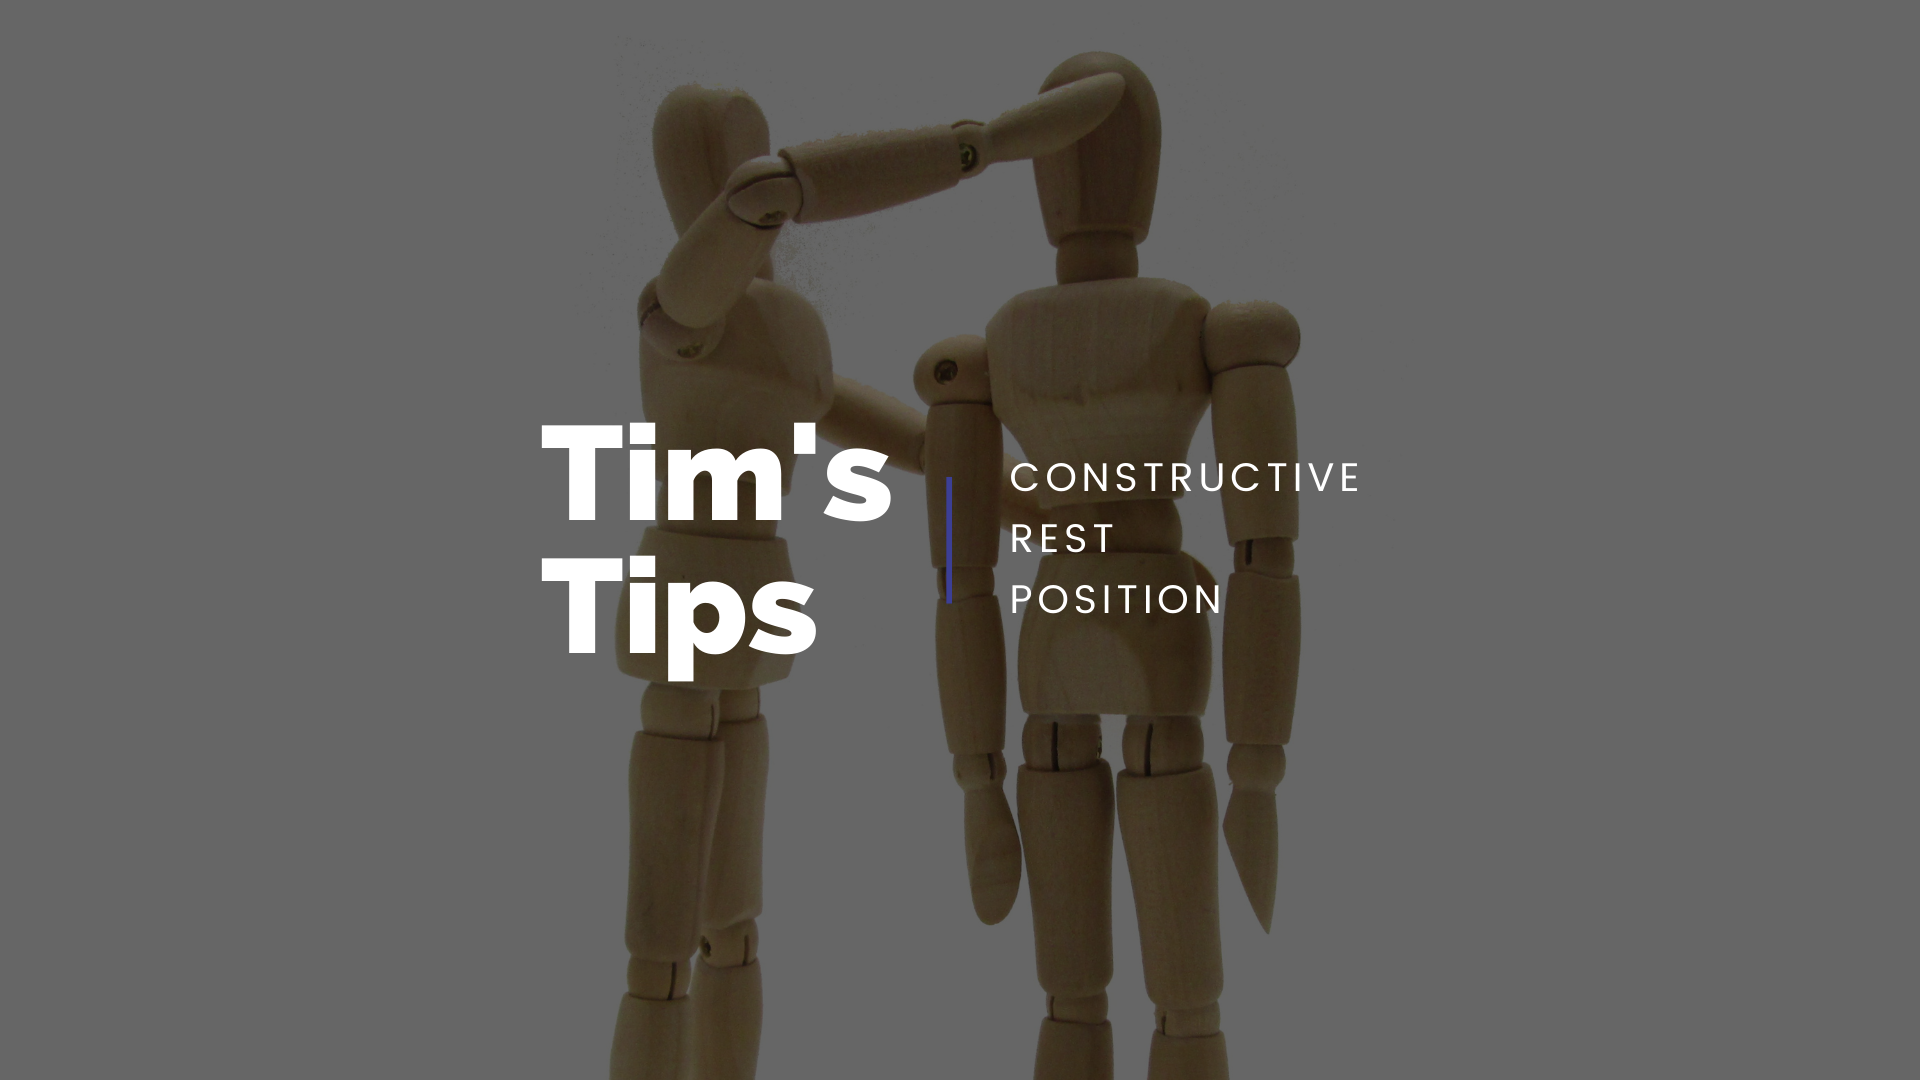 Tim's Tips: Constructive Rest Position